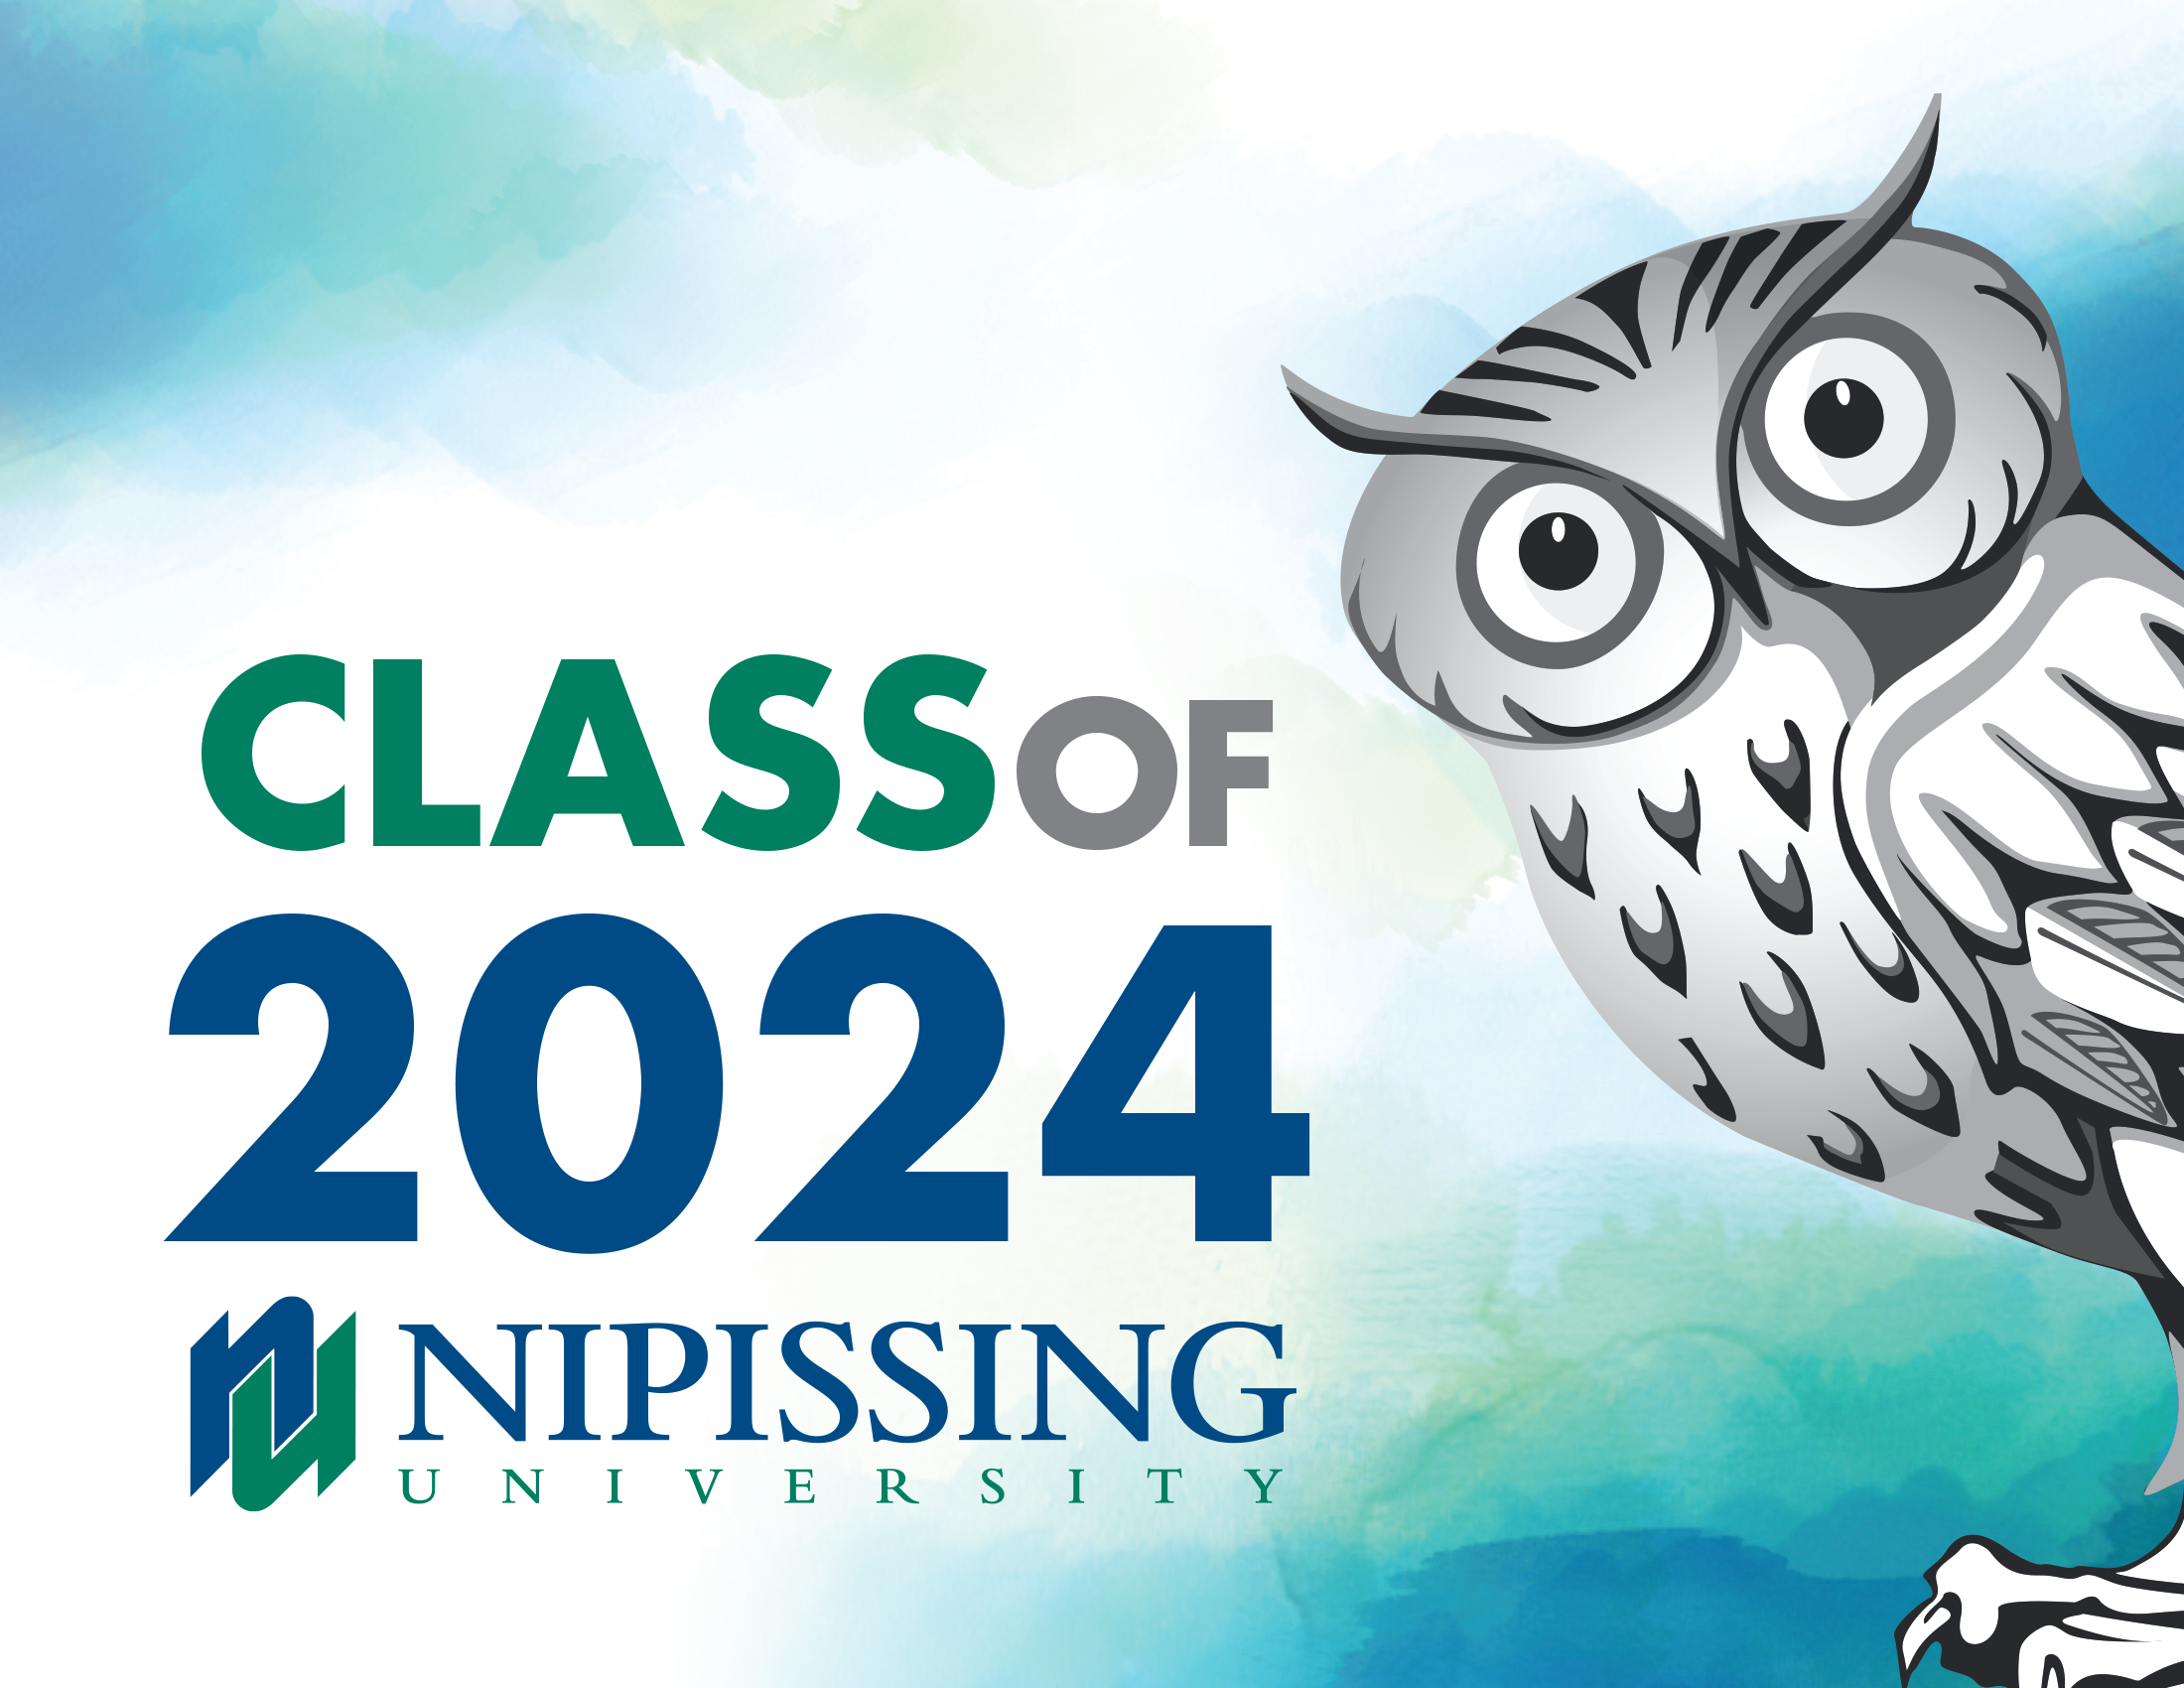 Class of 2023 Owl sign